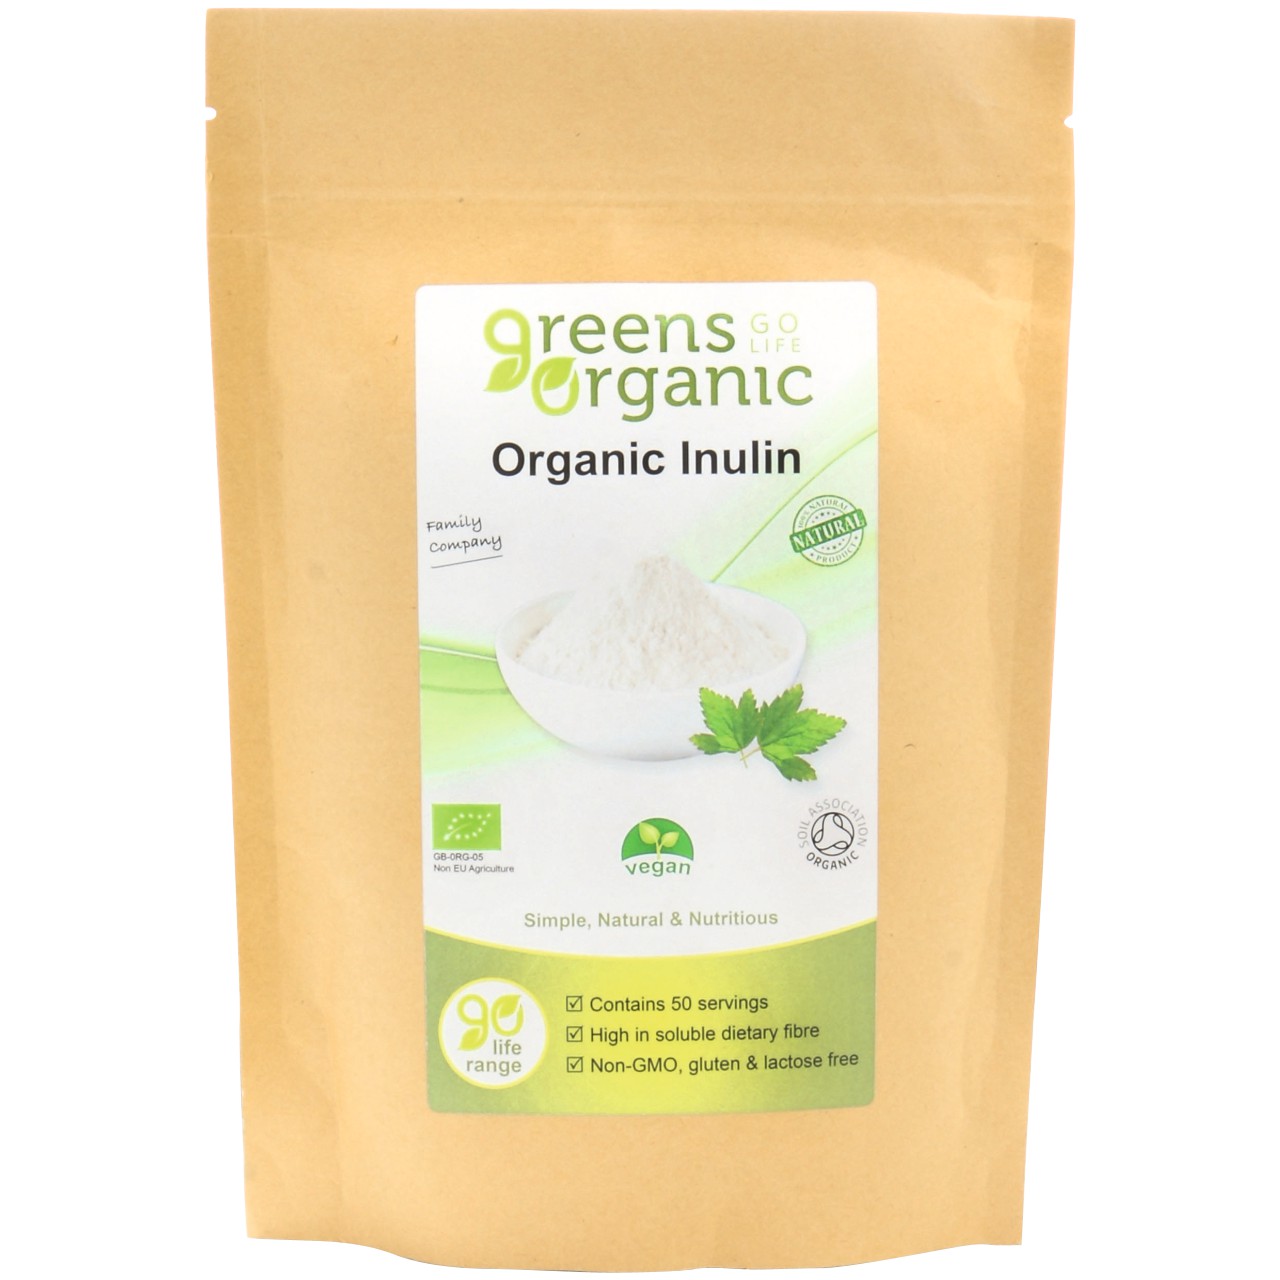 Greens Organic Prebiotic Fibre Inulin Powder